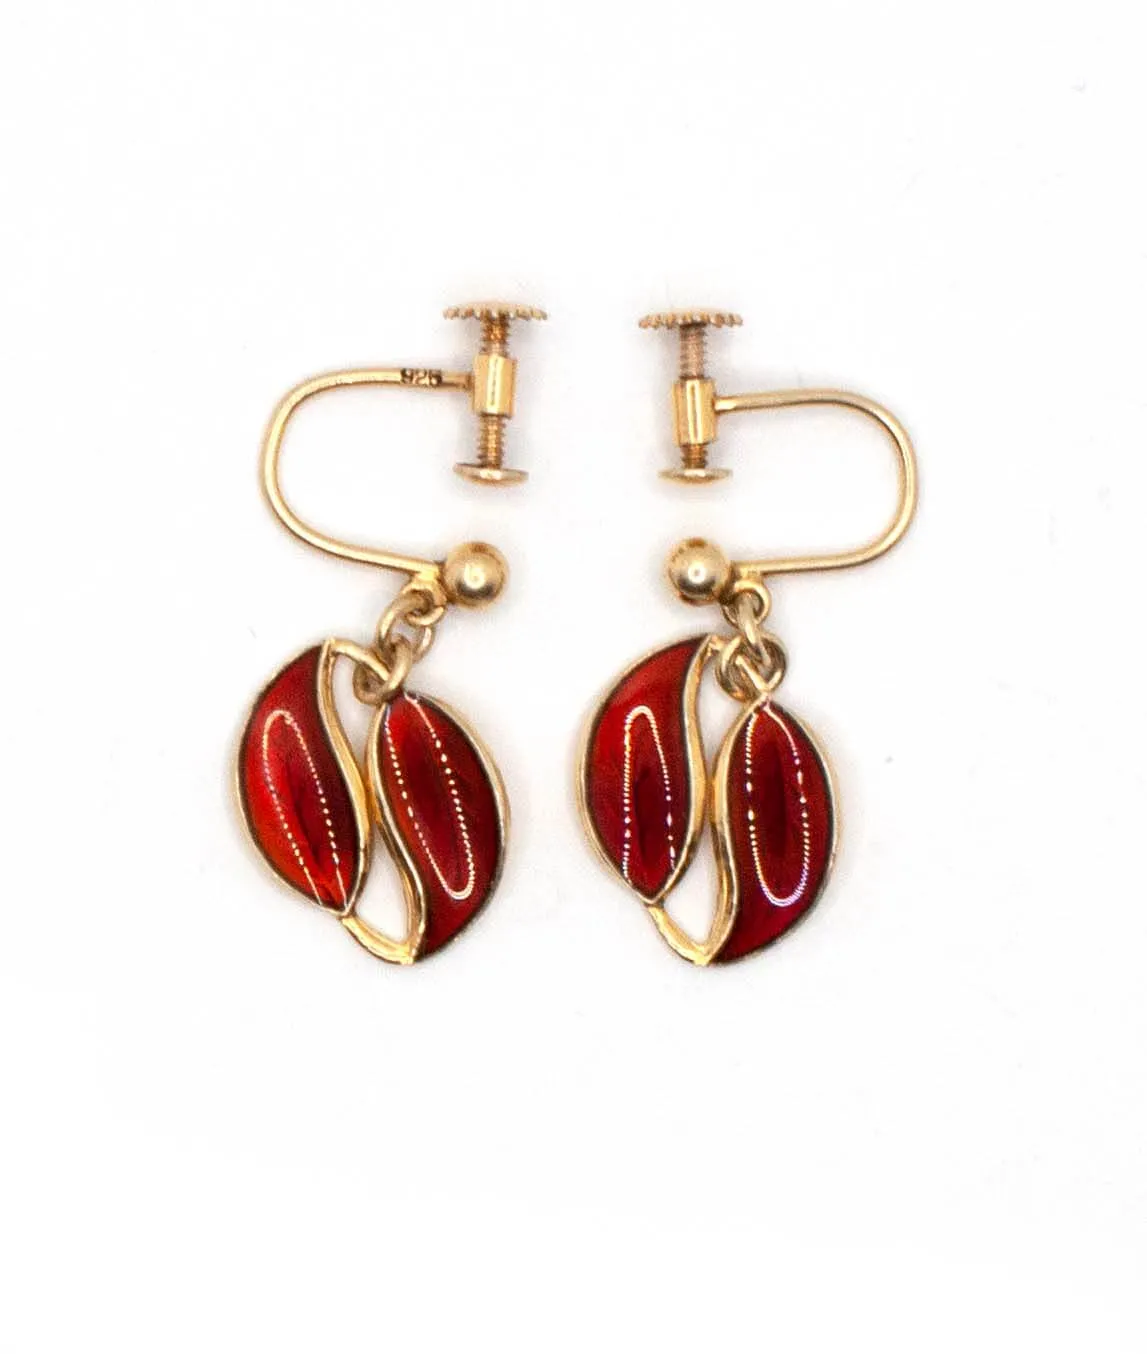 Red enamel dangle leaf earrings on gilded silver with screw back fittings